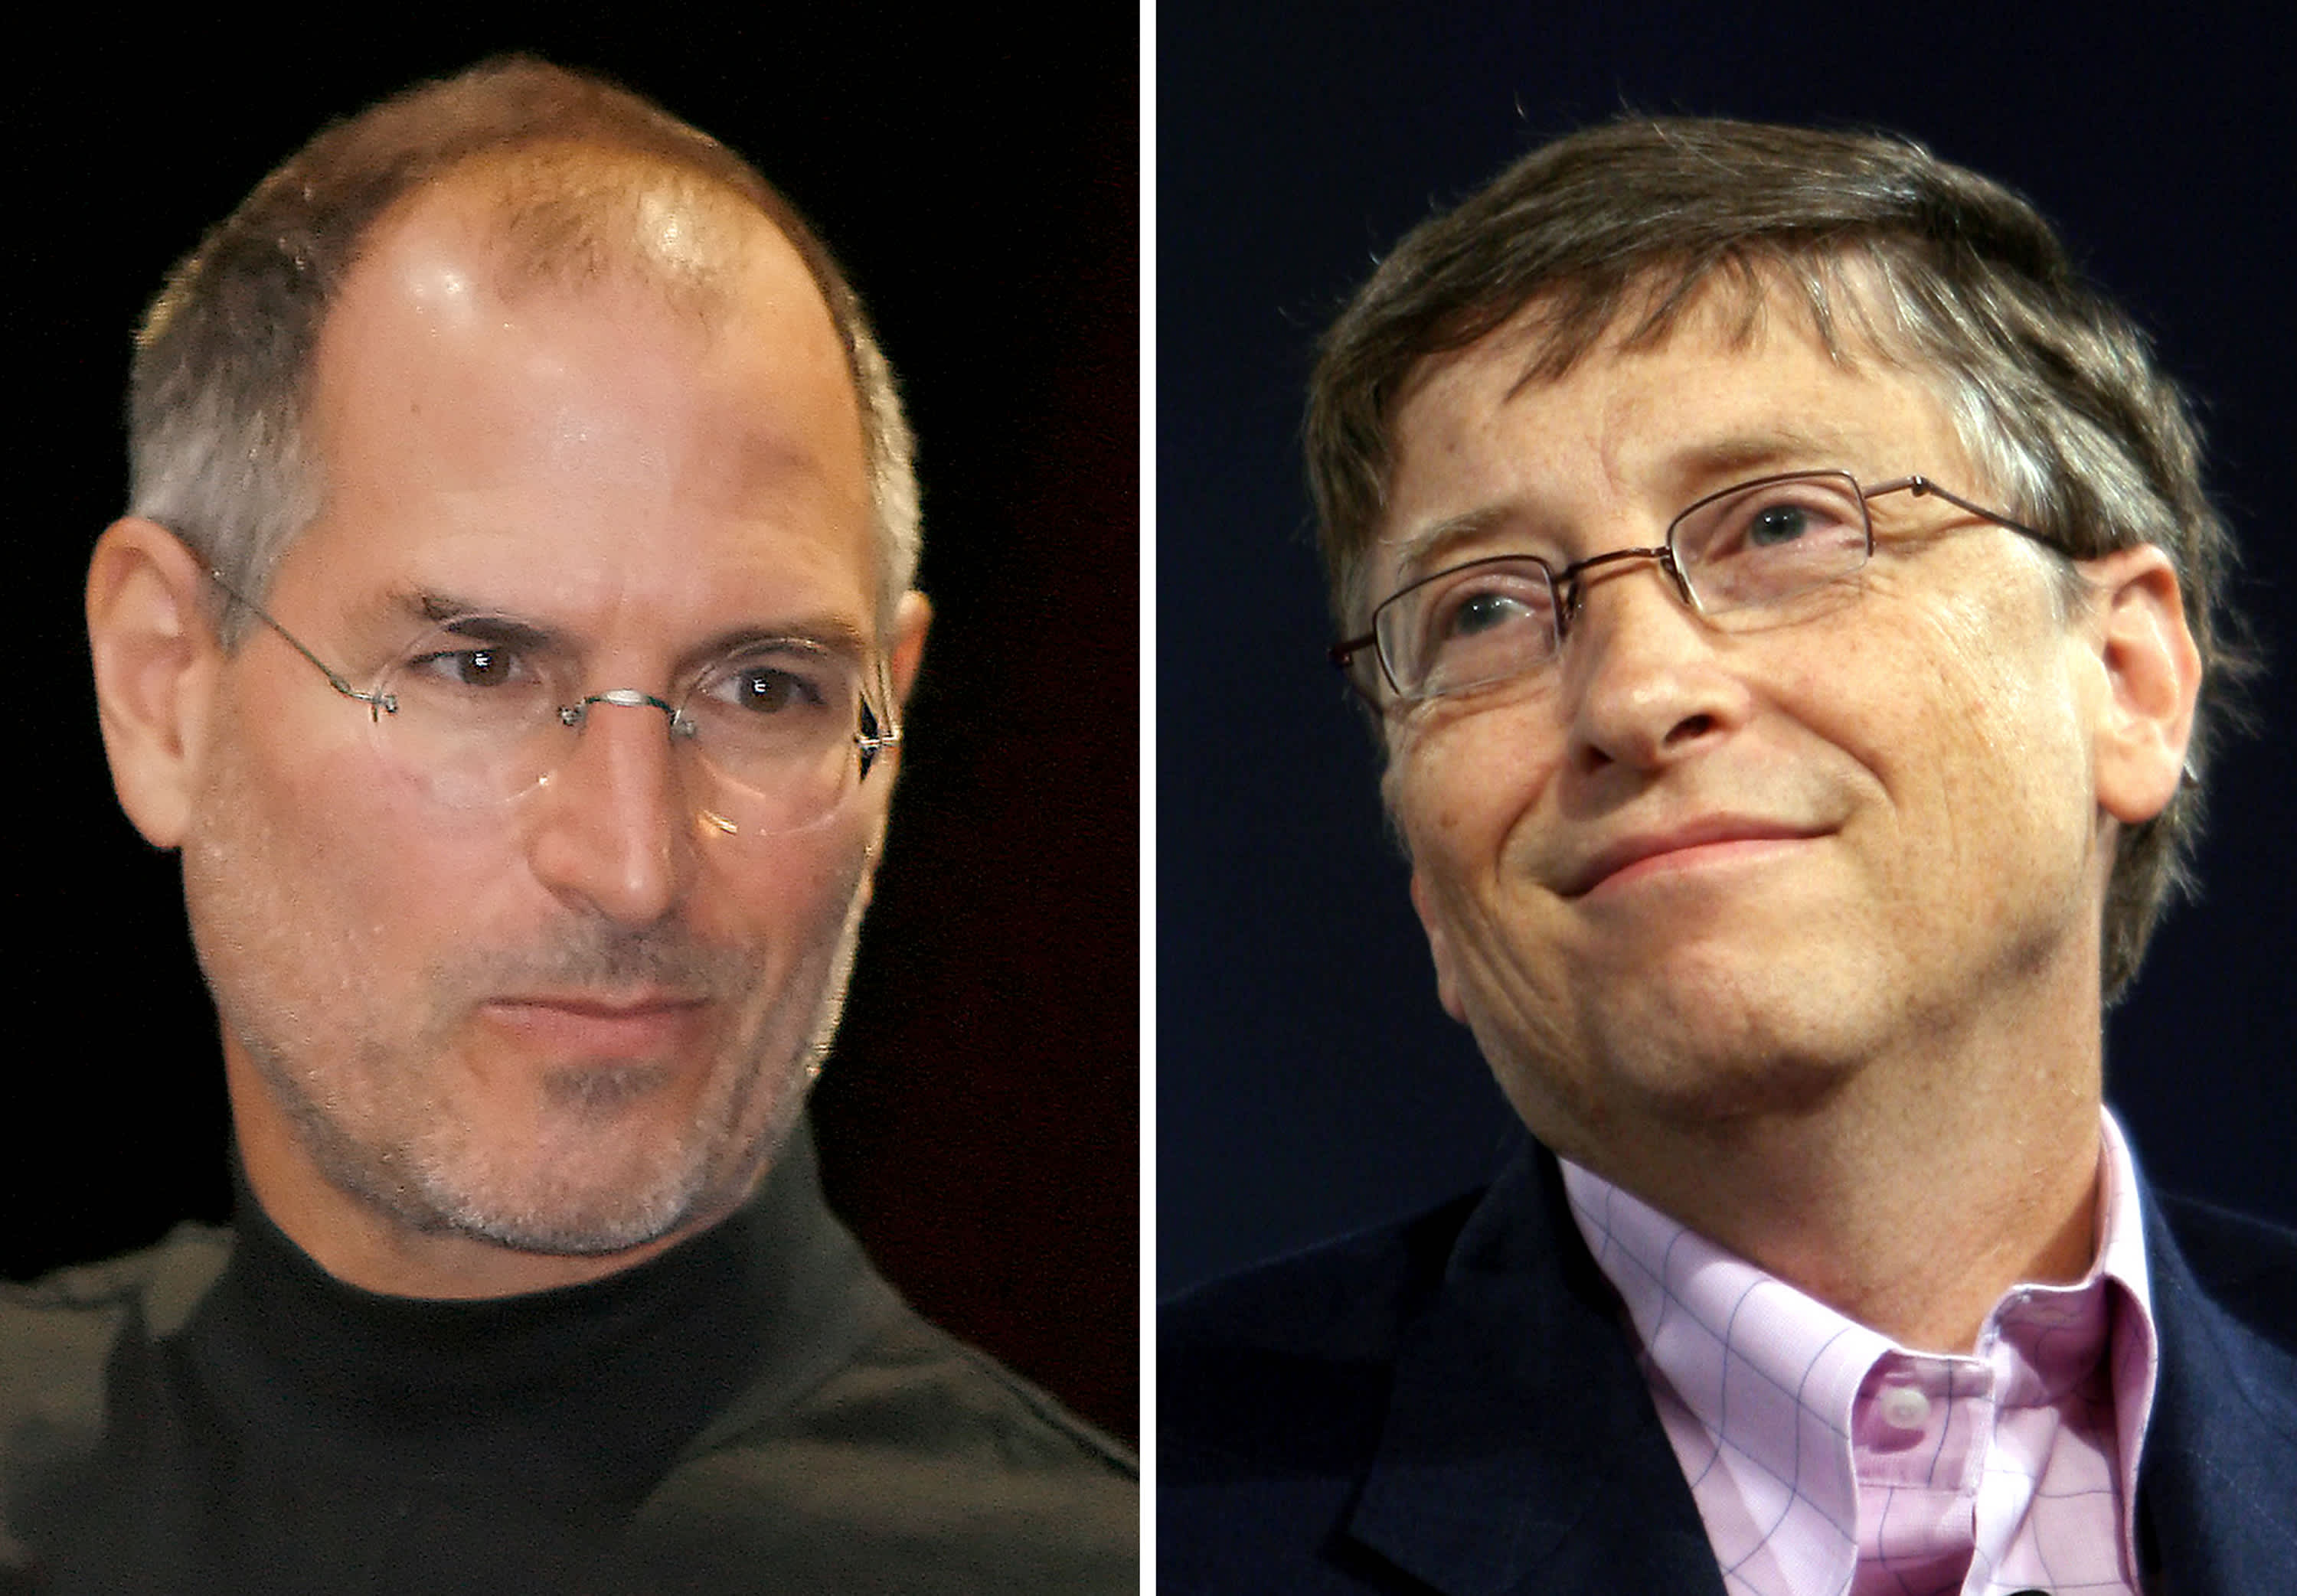 Is Steve Jobs more successful than Bill Gates?